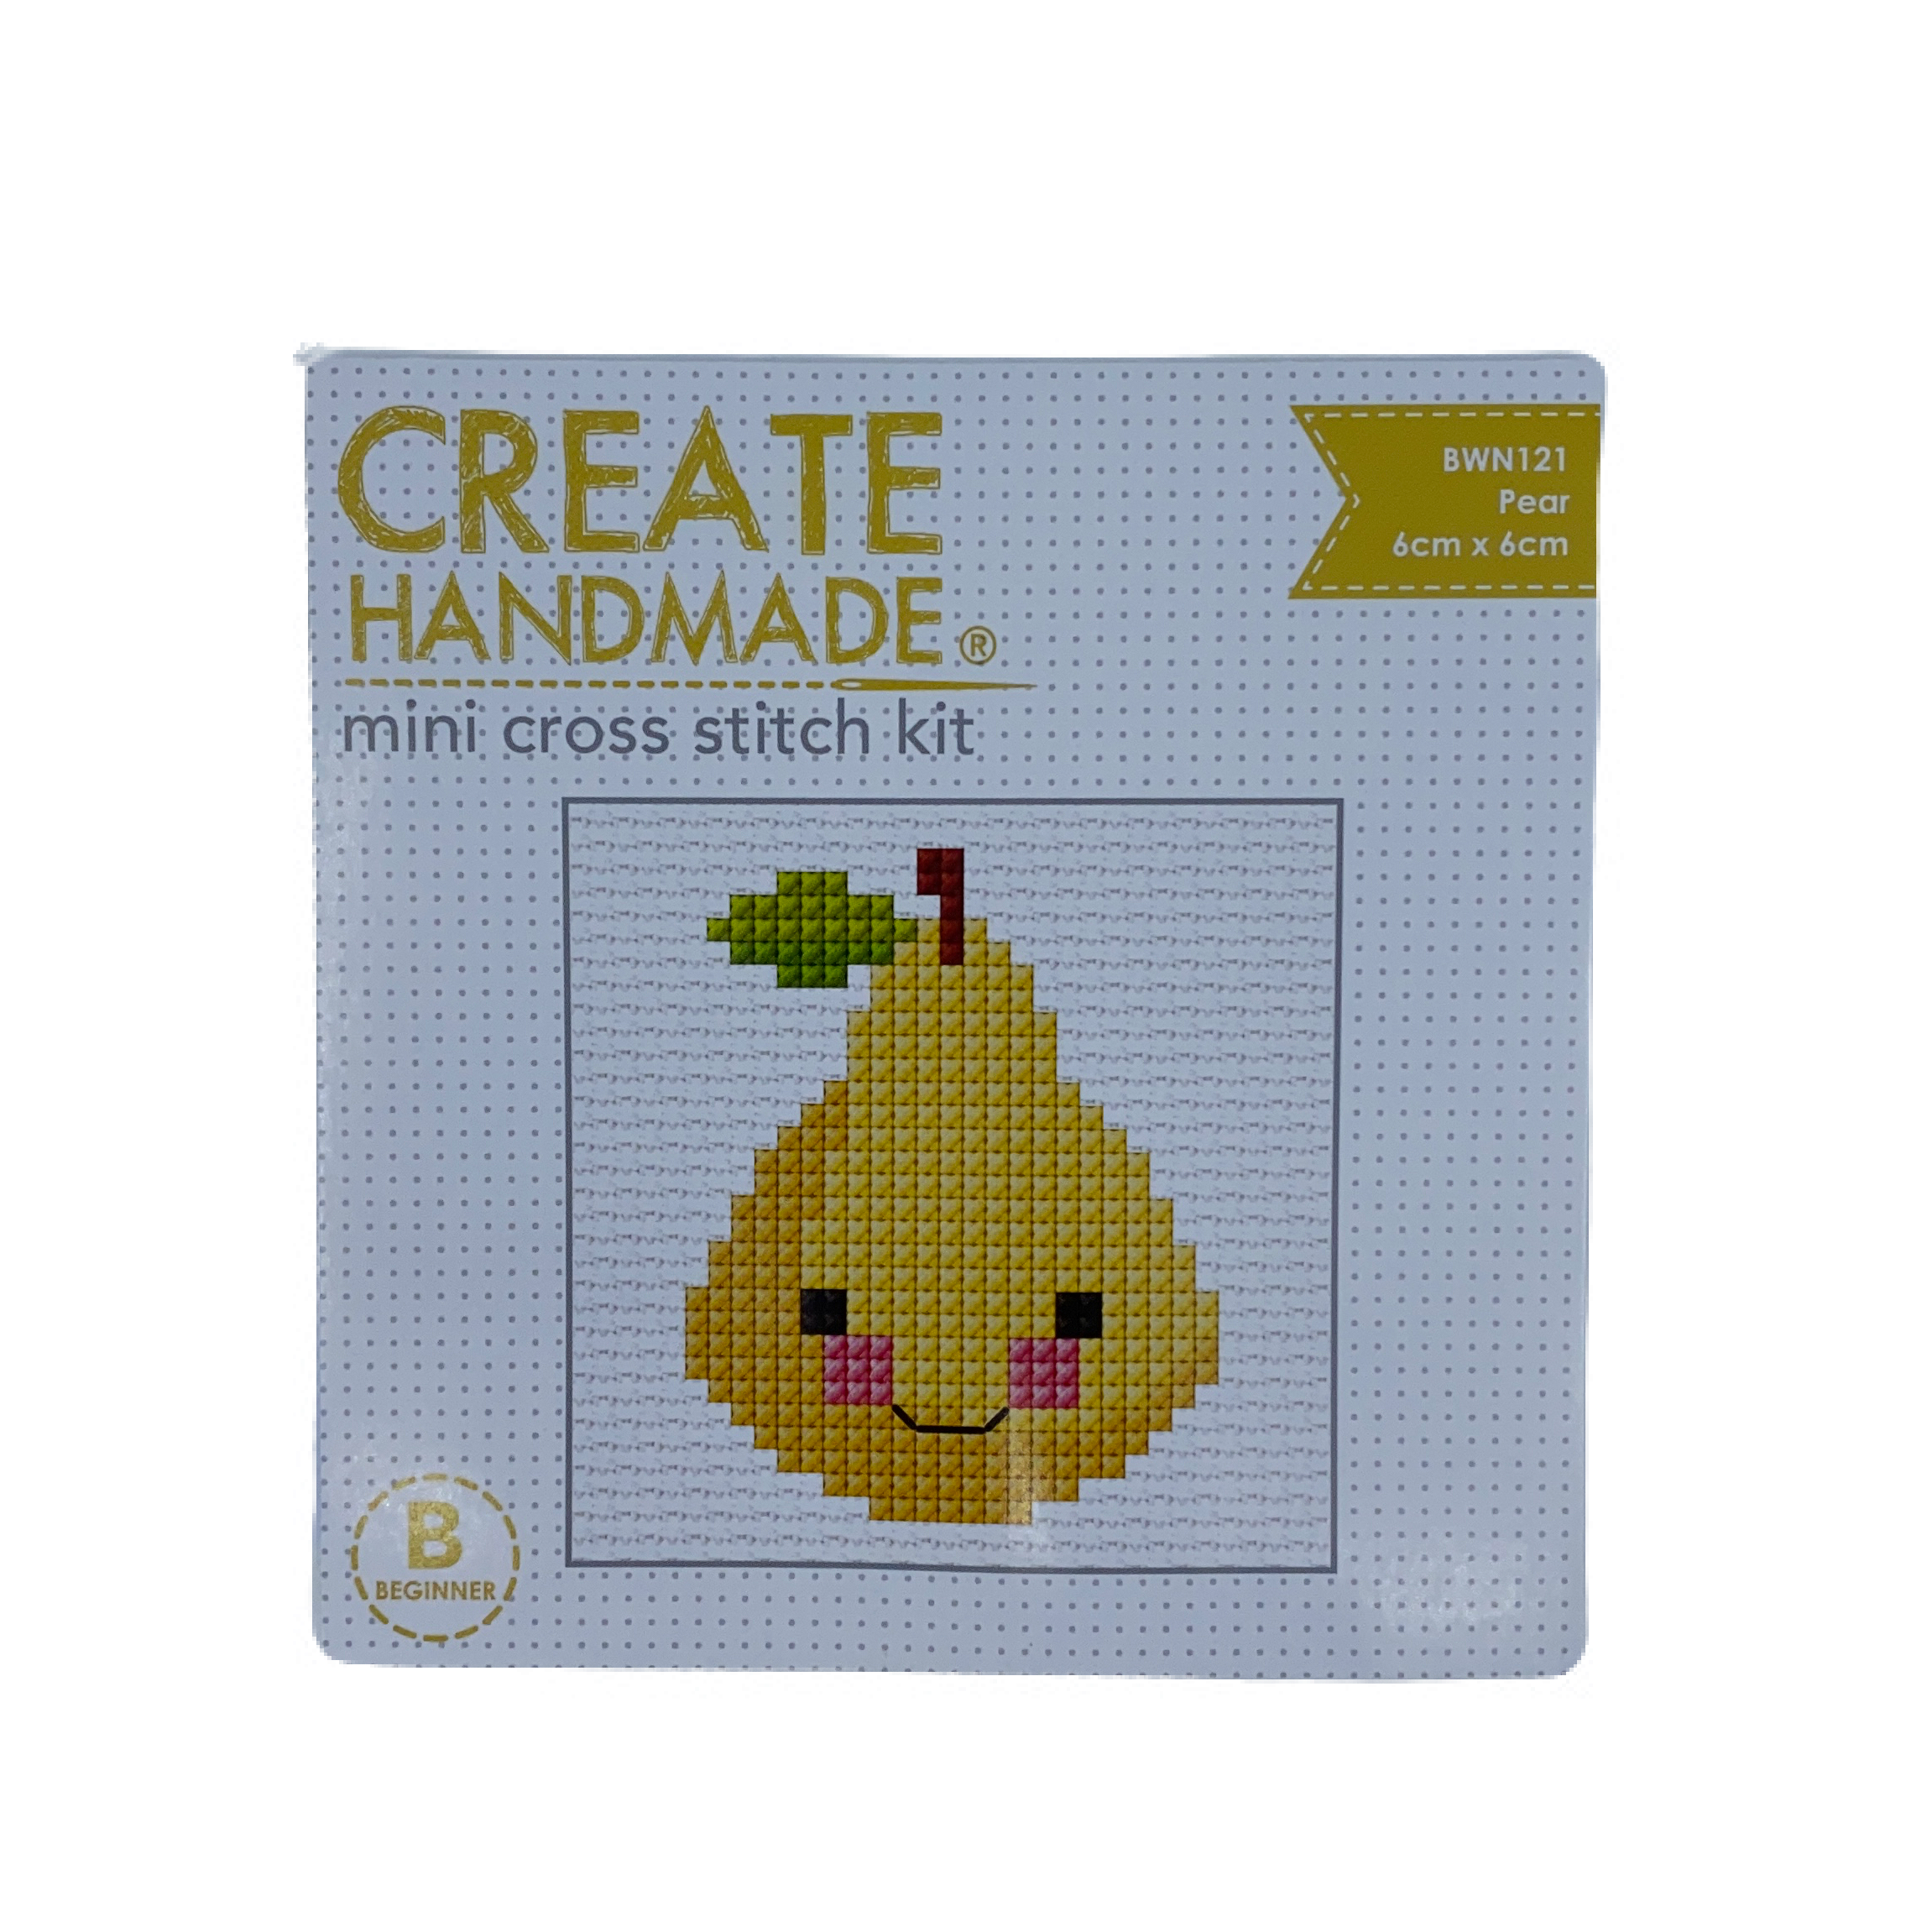 Create Handmade Mini Cross Stitch Kit Pear 6 x 6cm 2 Green Zebras